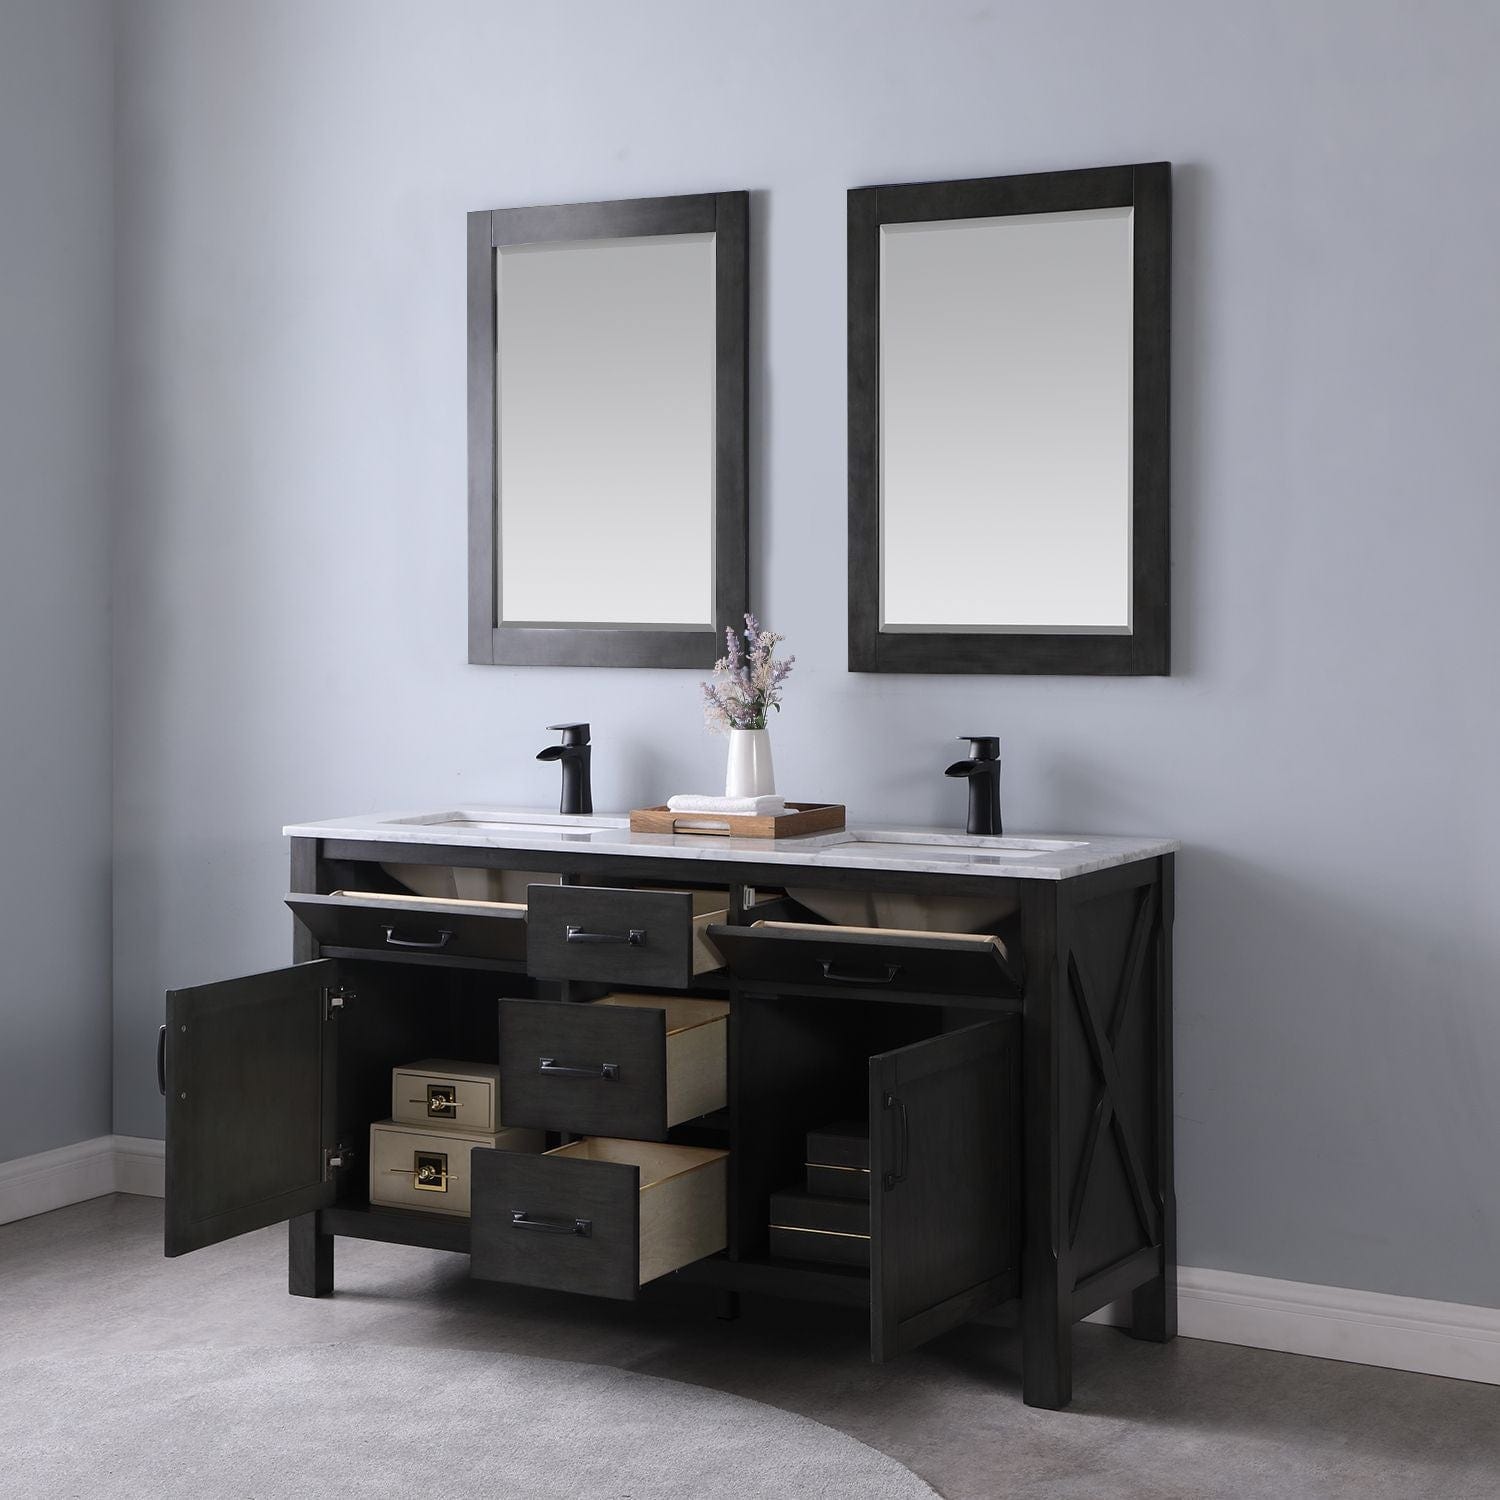 Altair Maribella 30" Single Bathroom Vanity Set in Rust Black and Carrara White Marble Countertop with Mirror 535030-RL-CA - Molaix631112970235Vanity535030-RL-CA